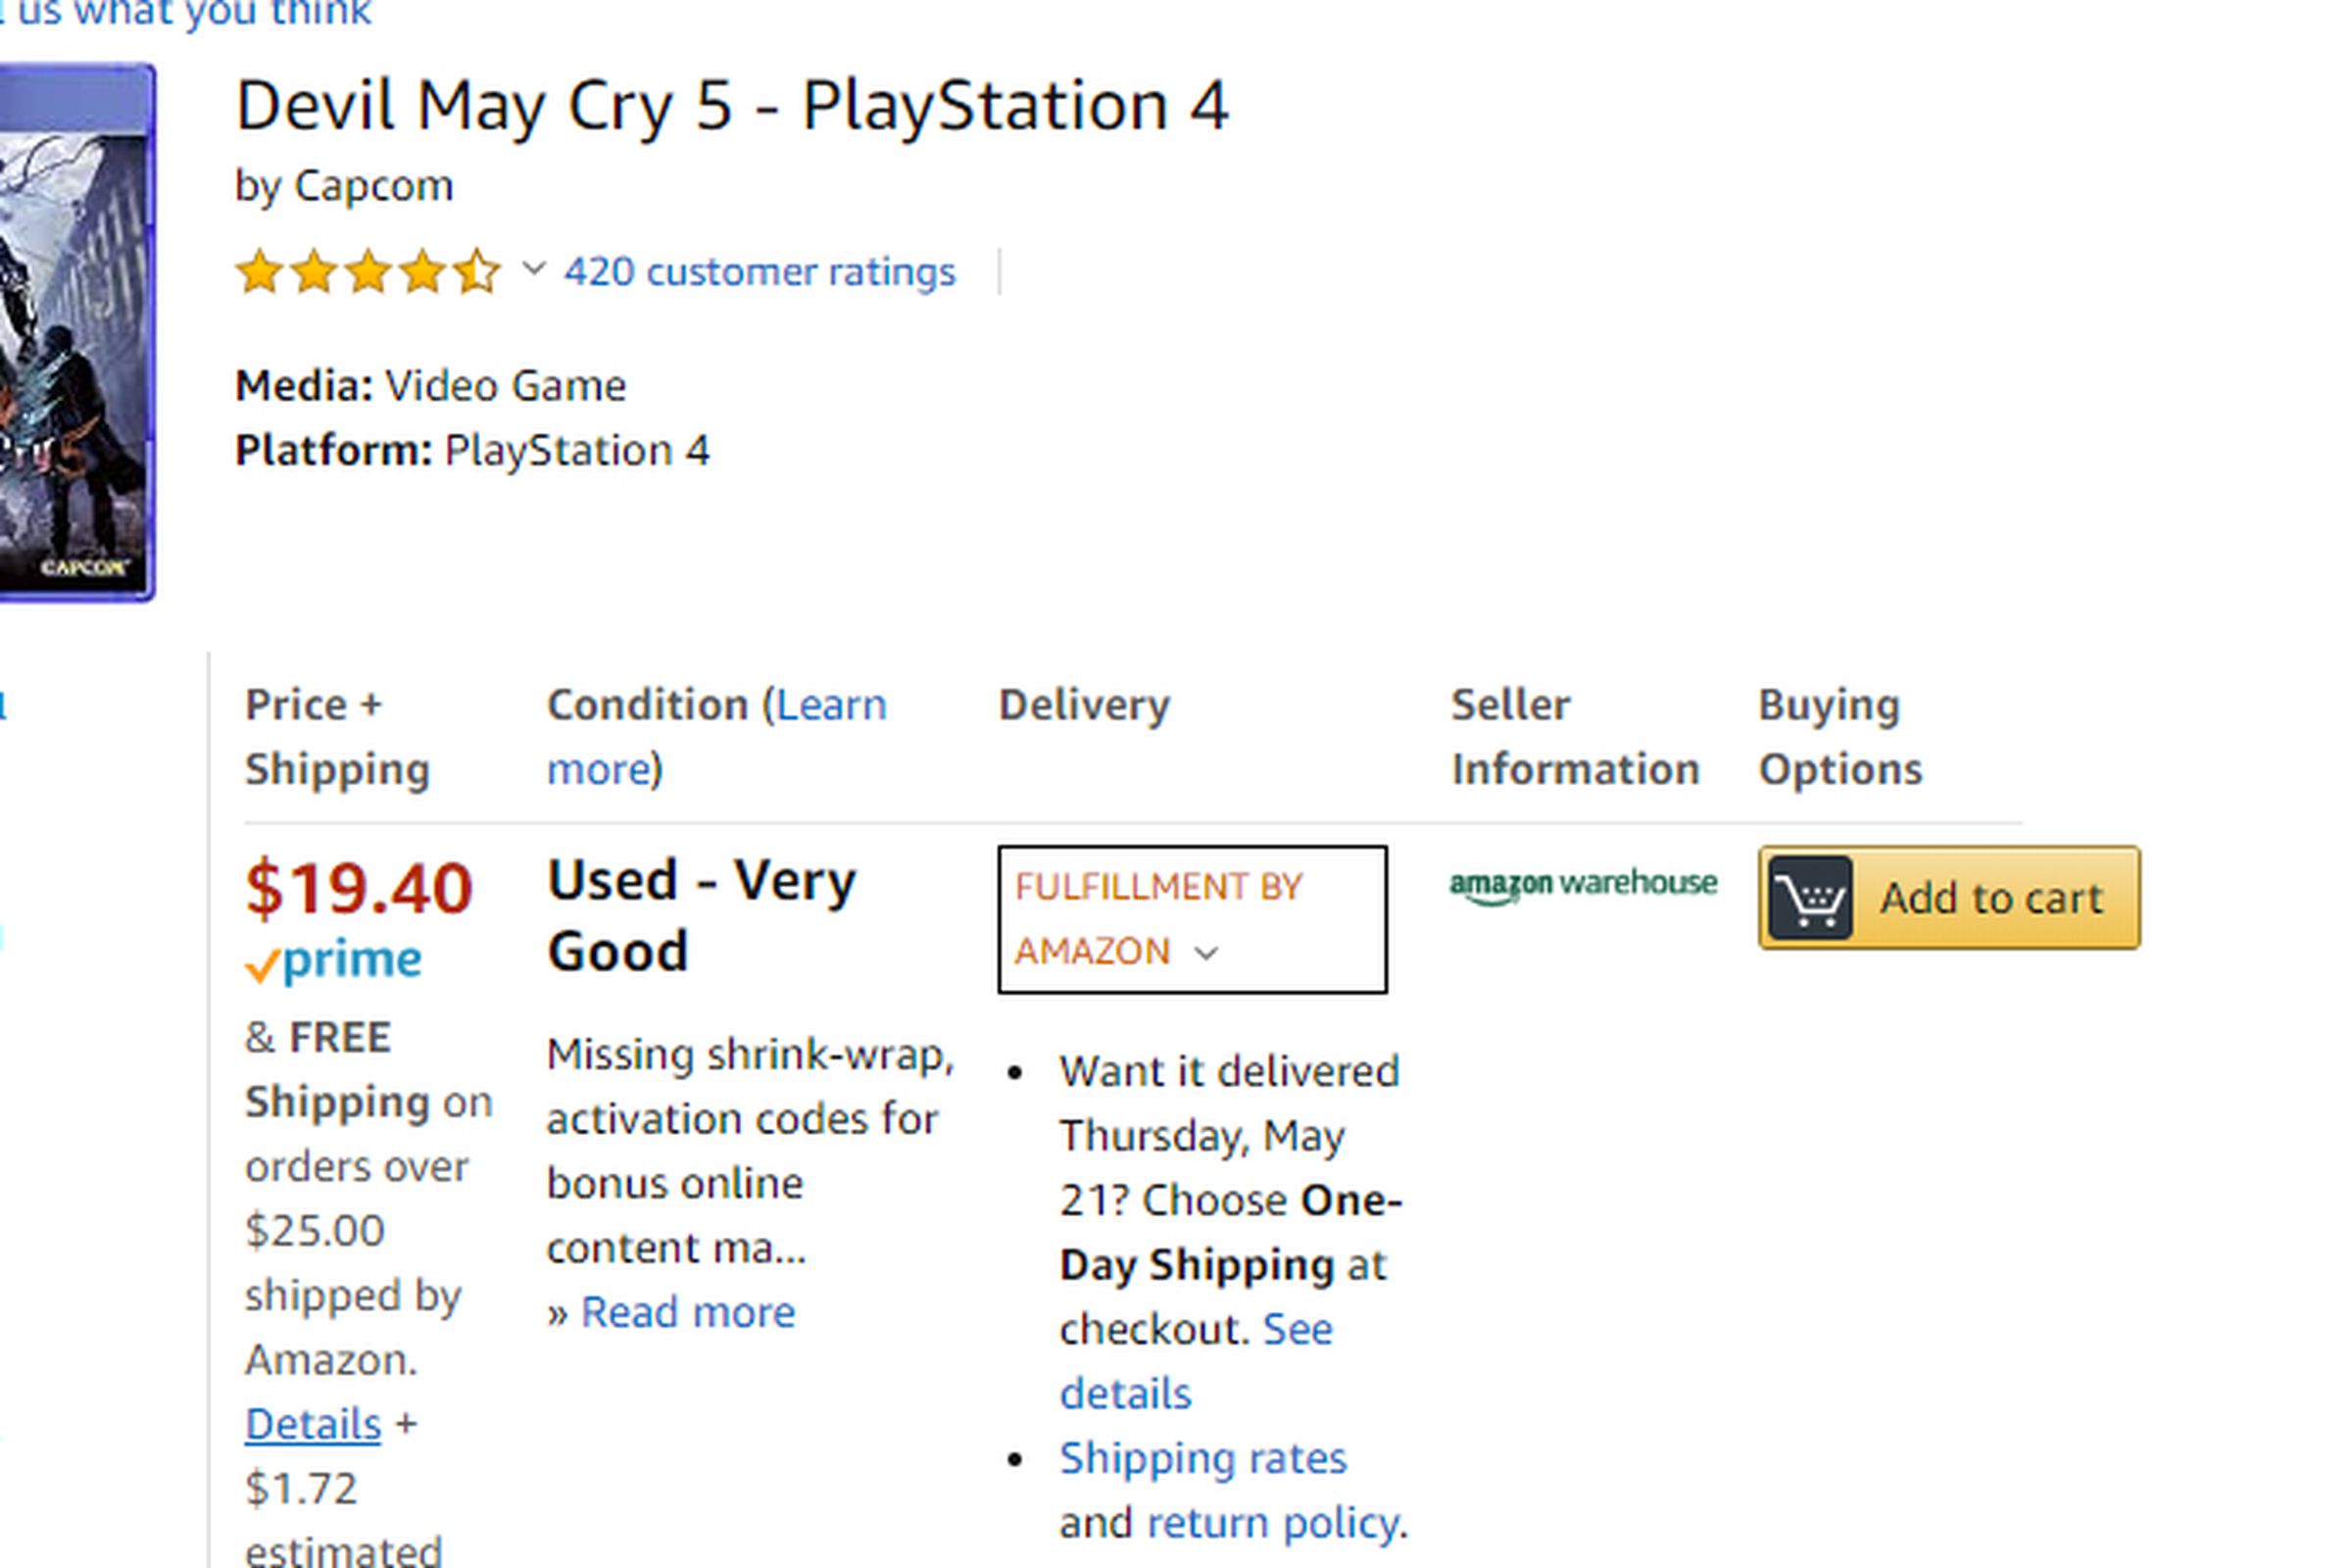 Devil May Cry 5 için Amazon Warehouse listesi